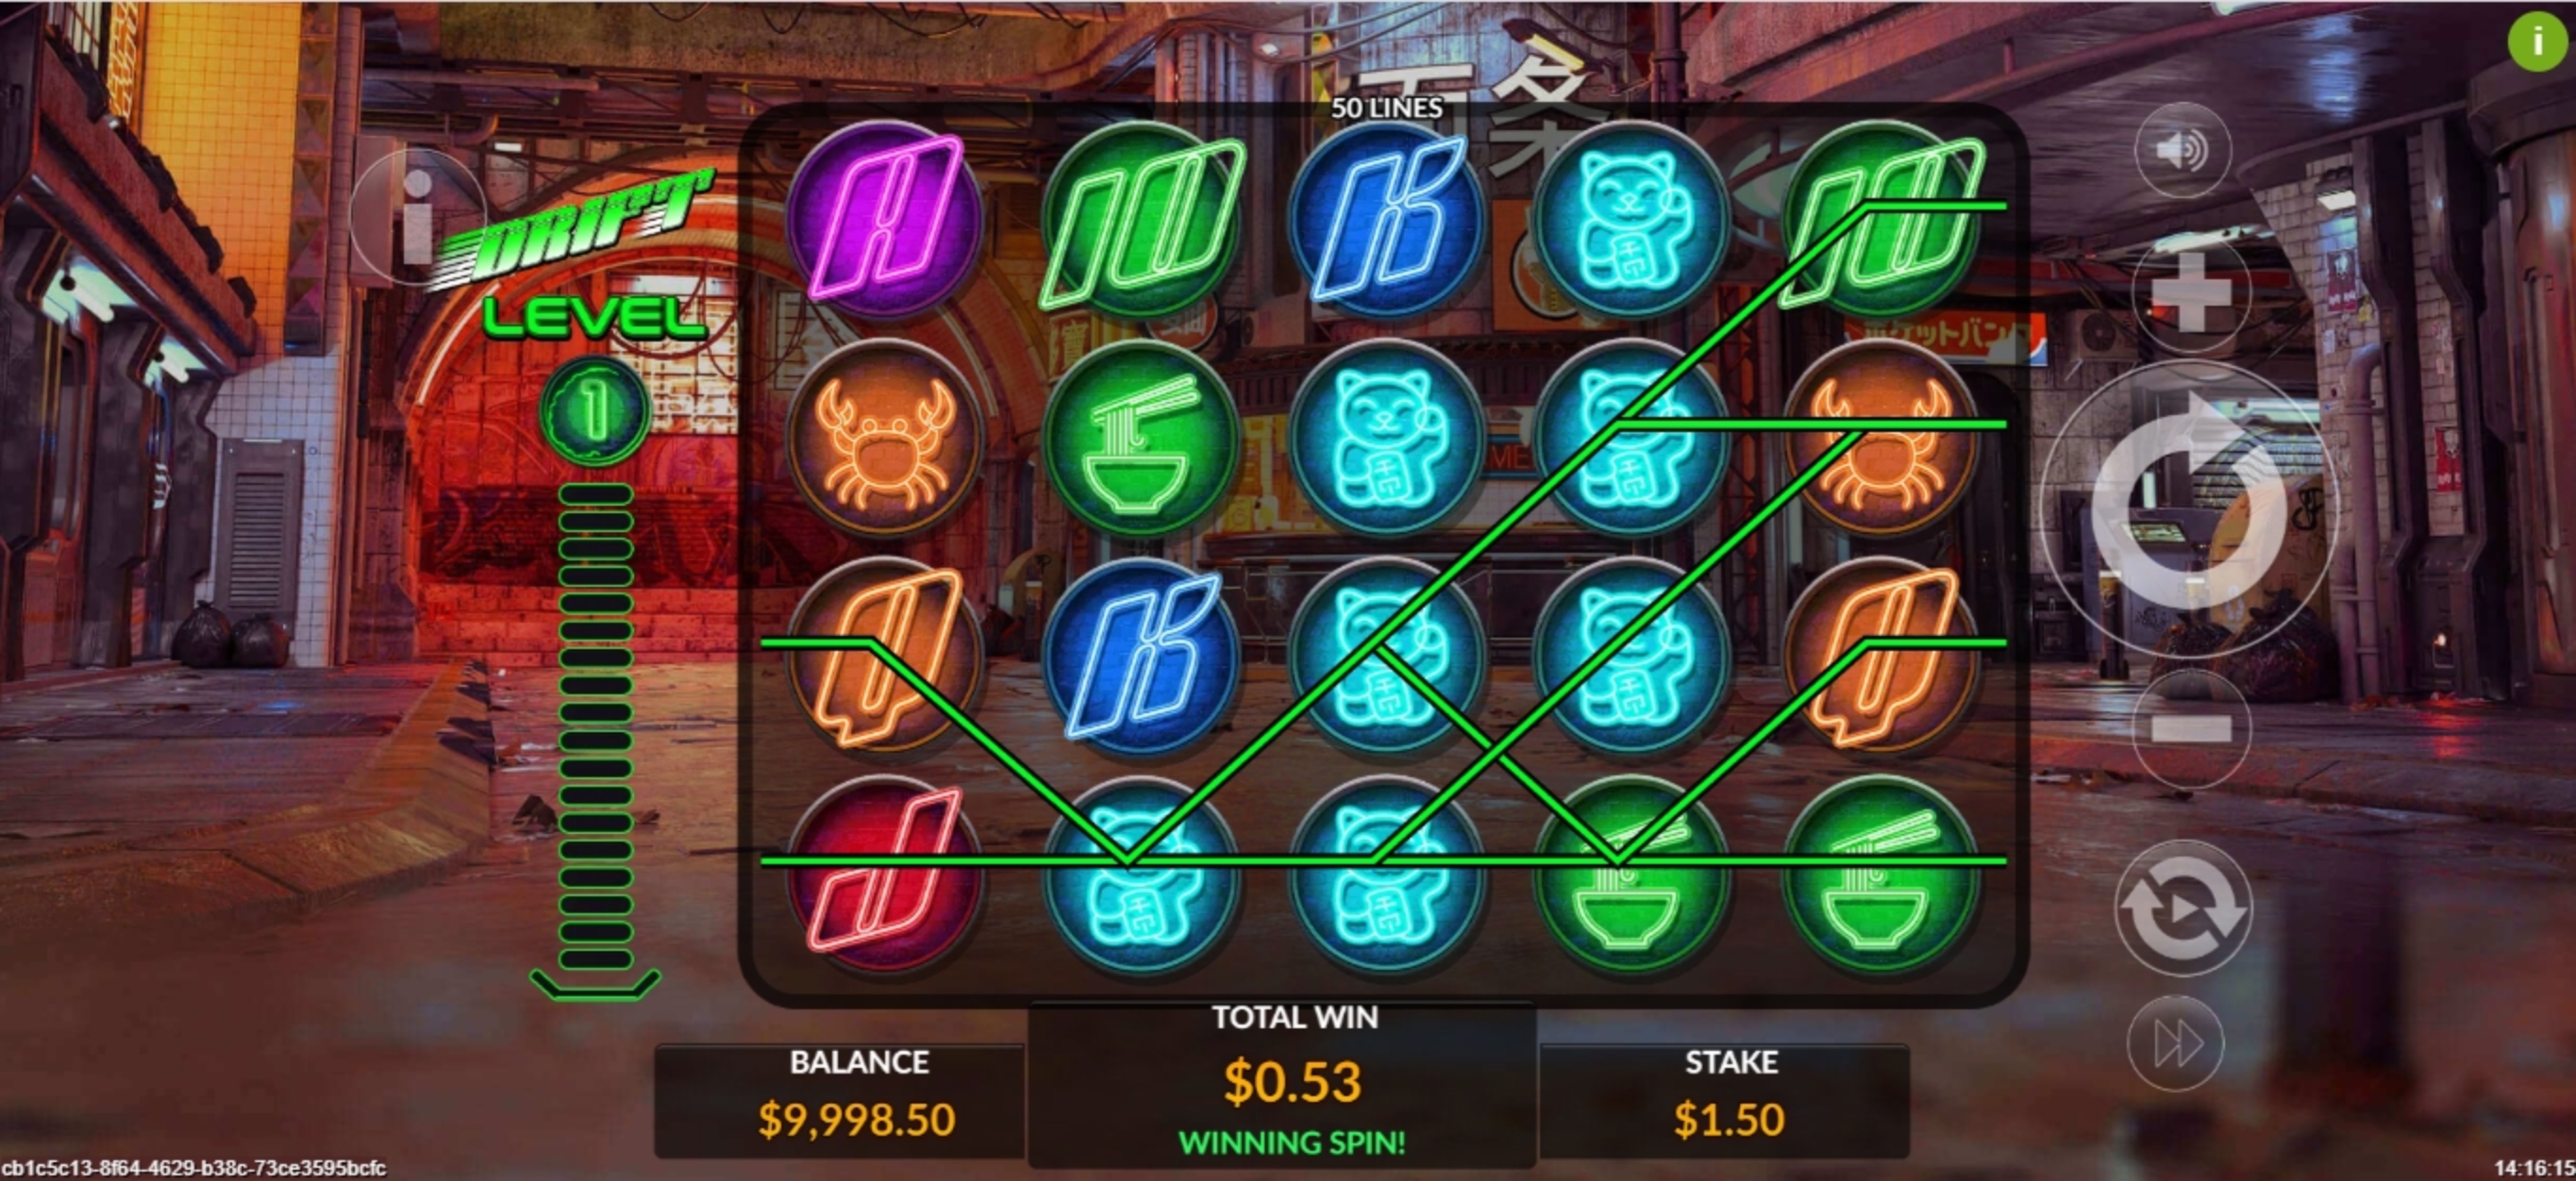 Win Money in Drift Free Slot Game by Maverick